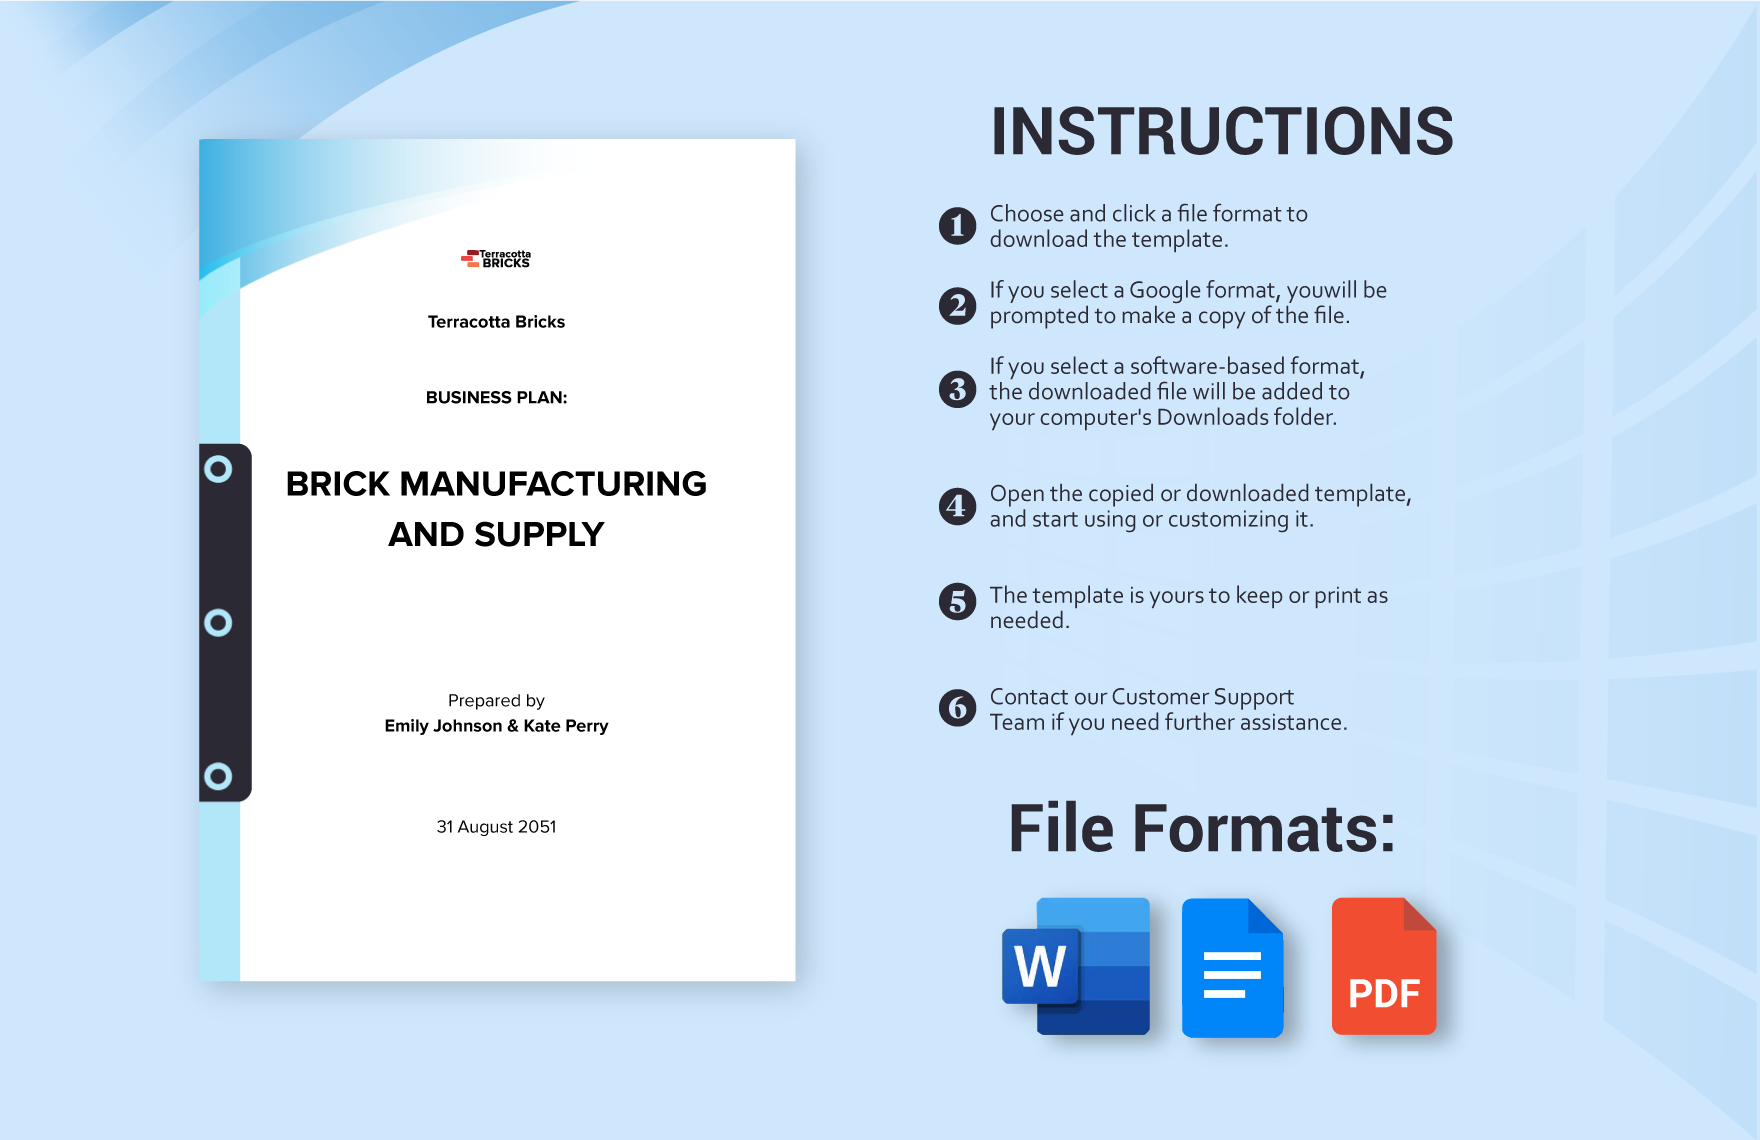 clay brick manufacturing business plan pdf